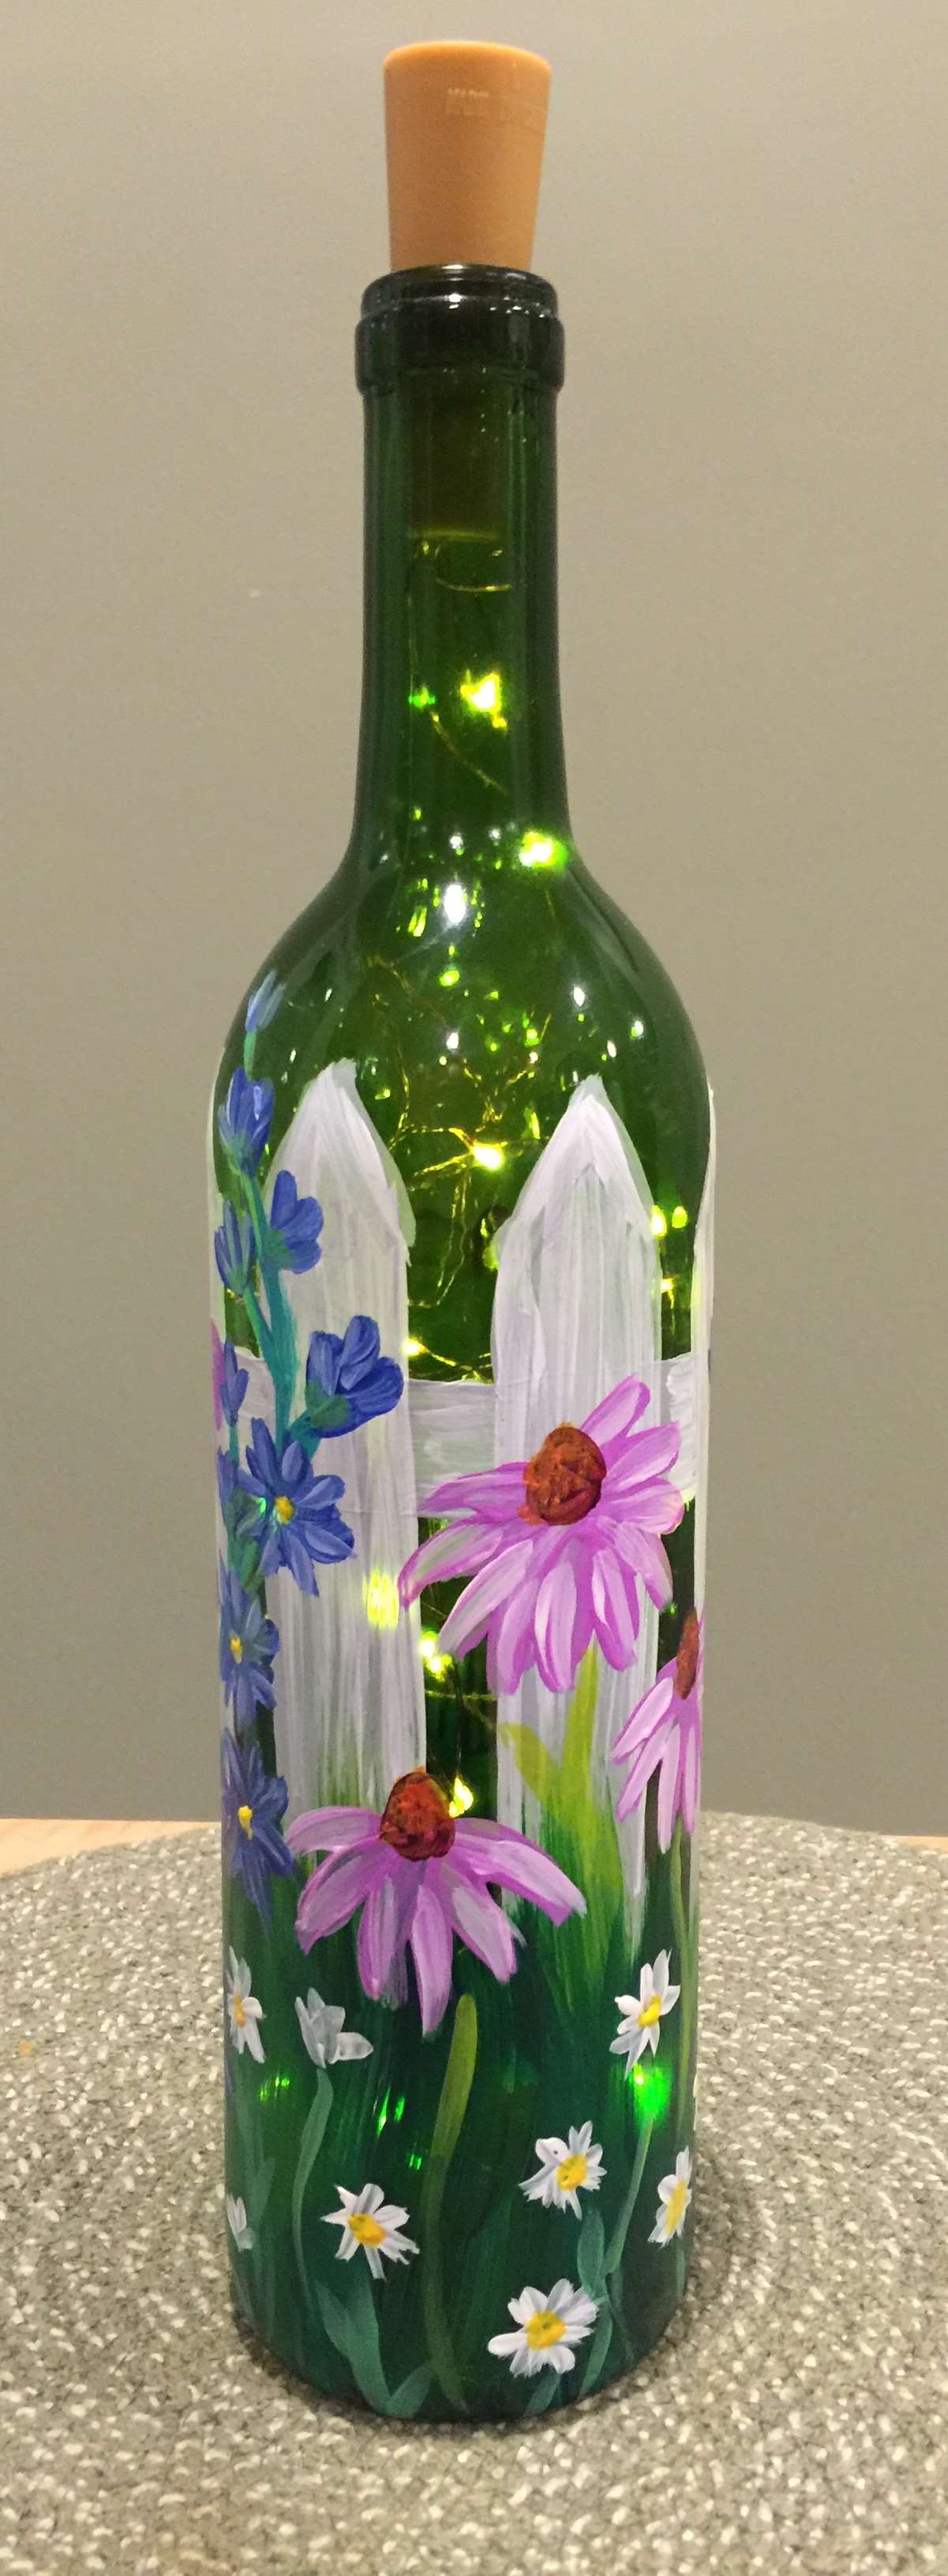 wine bottle painting designs